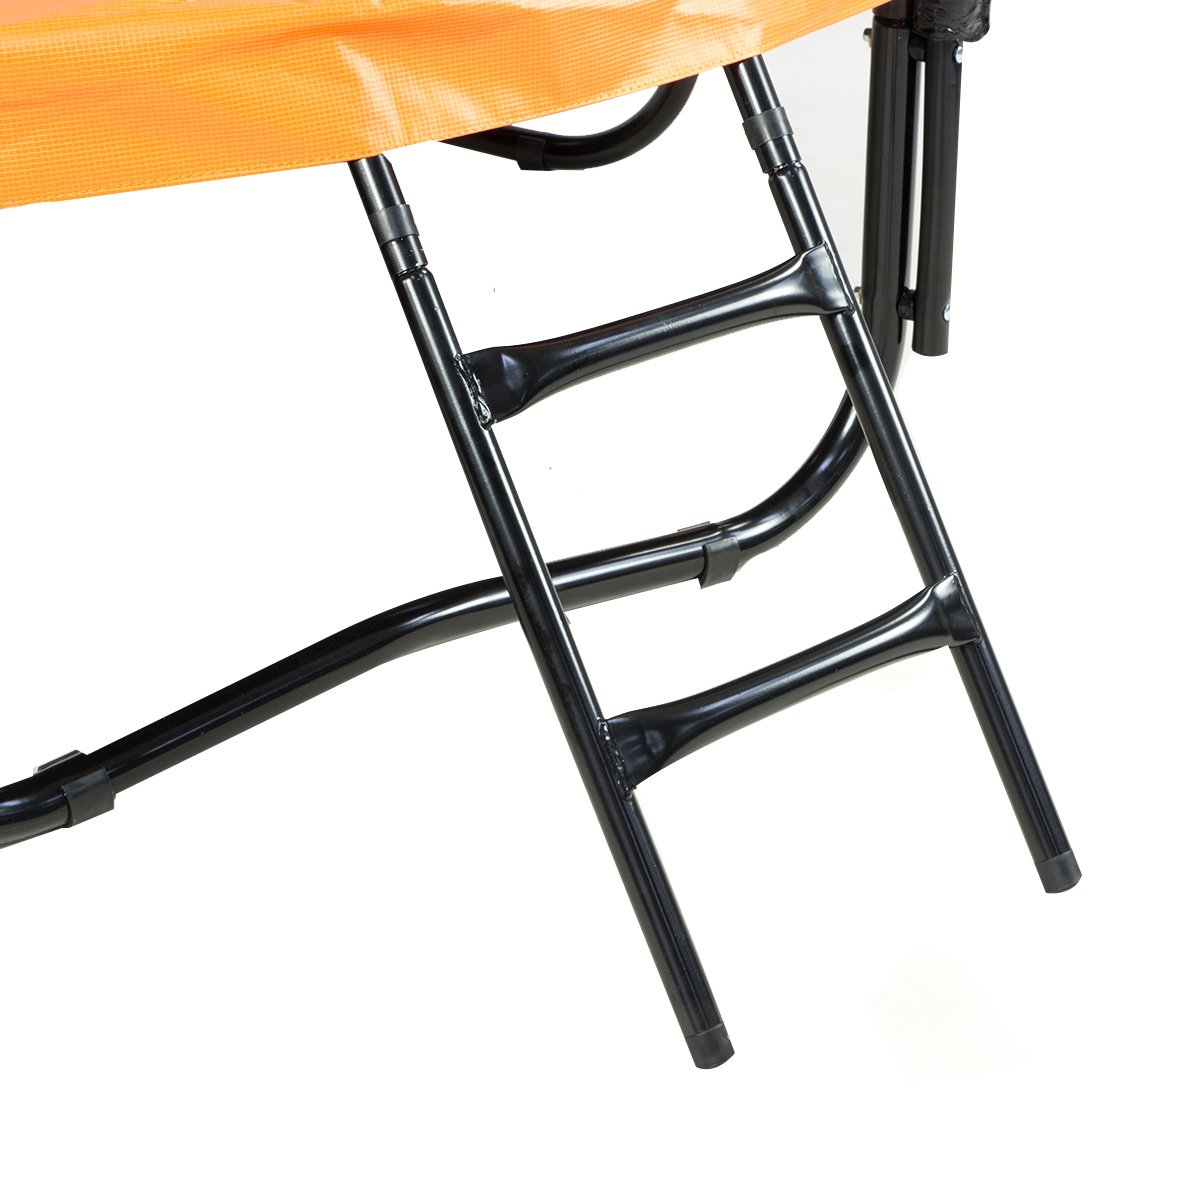 10ft Outdoor Trampoline Kids Children With Safety Enclosure Mat Pad Net Ladder Basketball Hoop Set - Orange